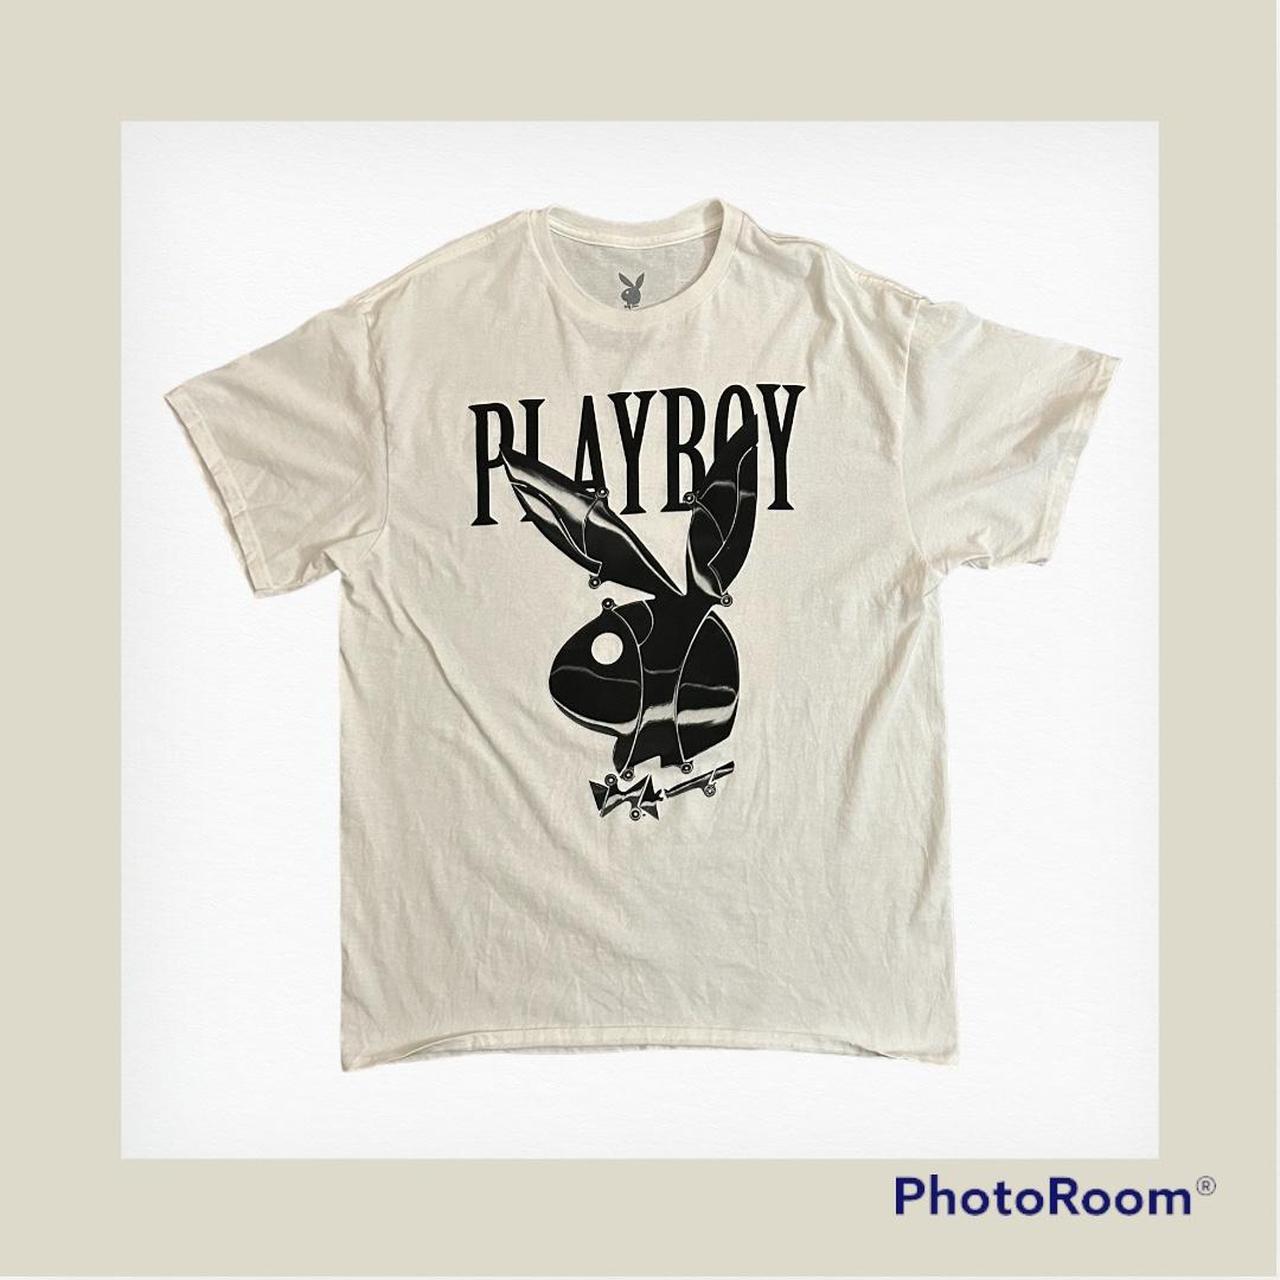 Supreme x Playboy T-Shirt -used a good amount of - Depop